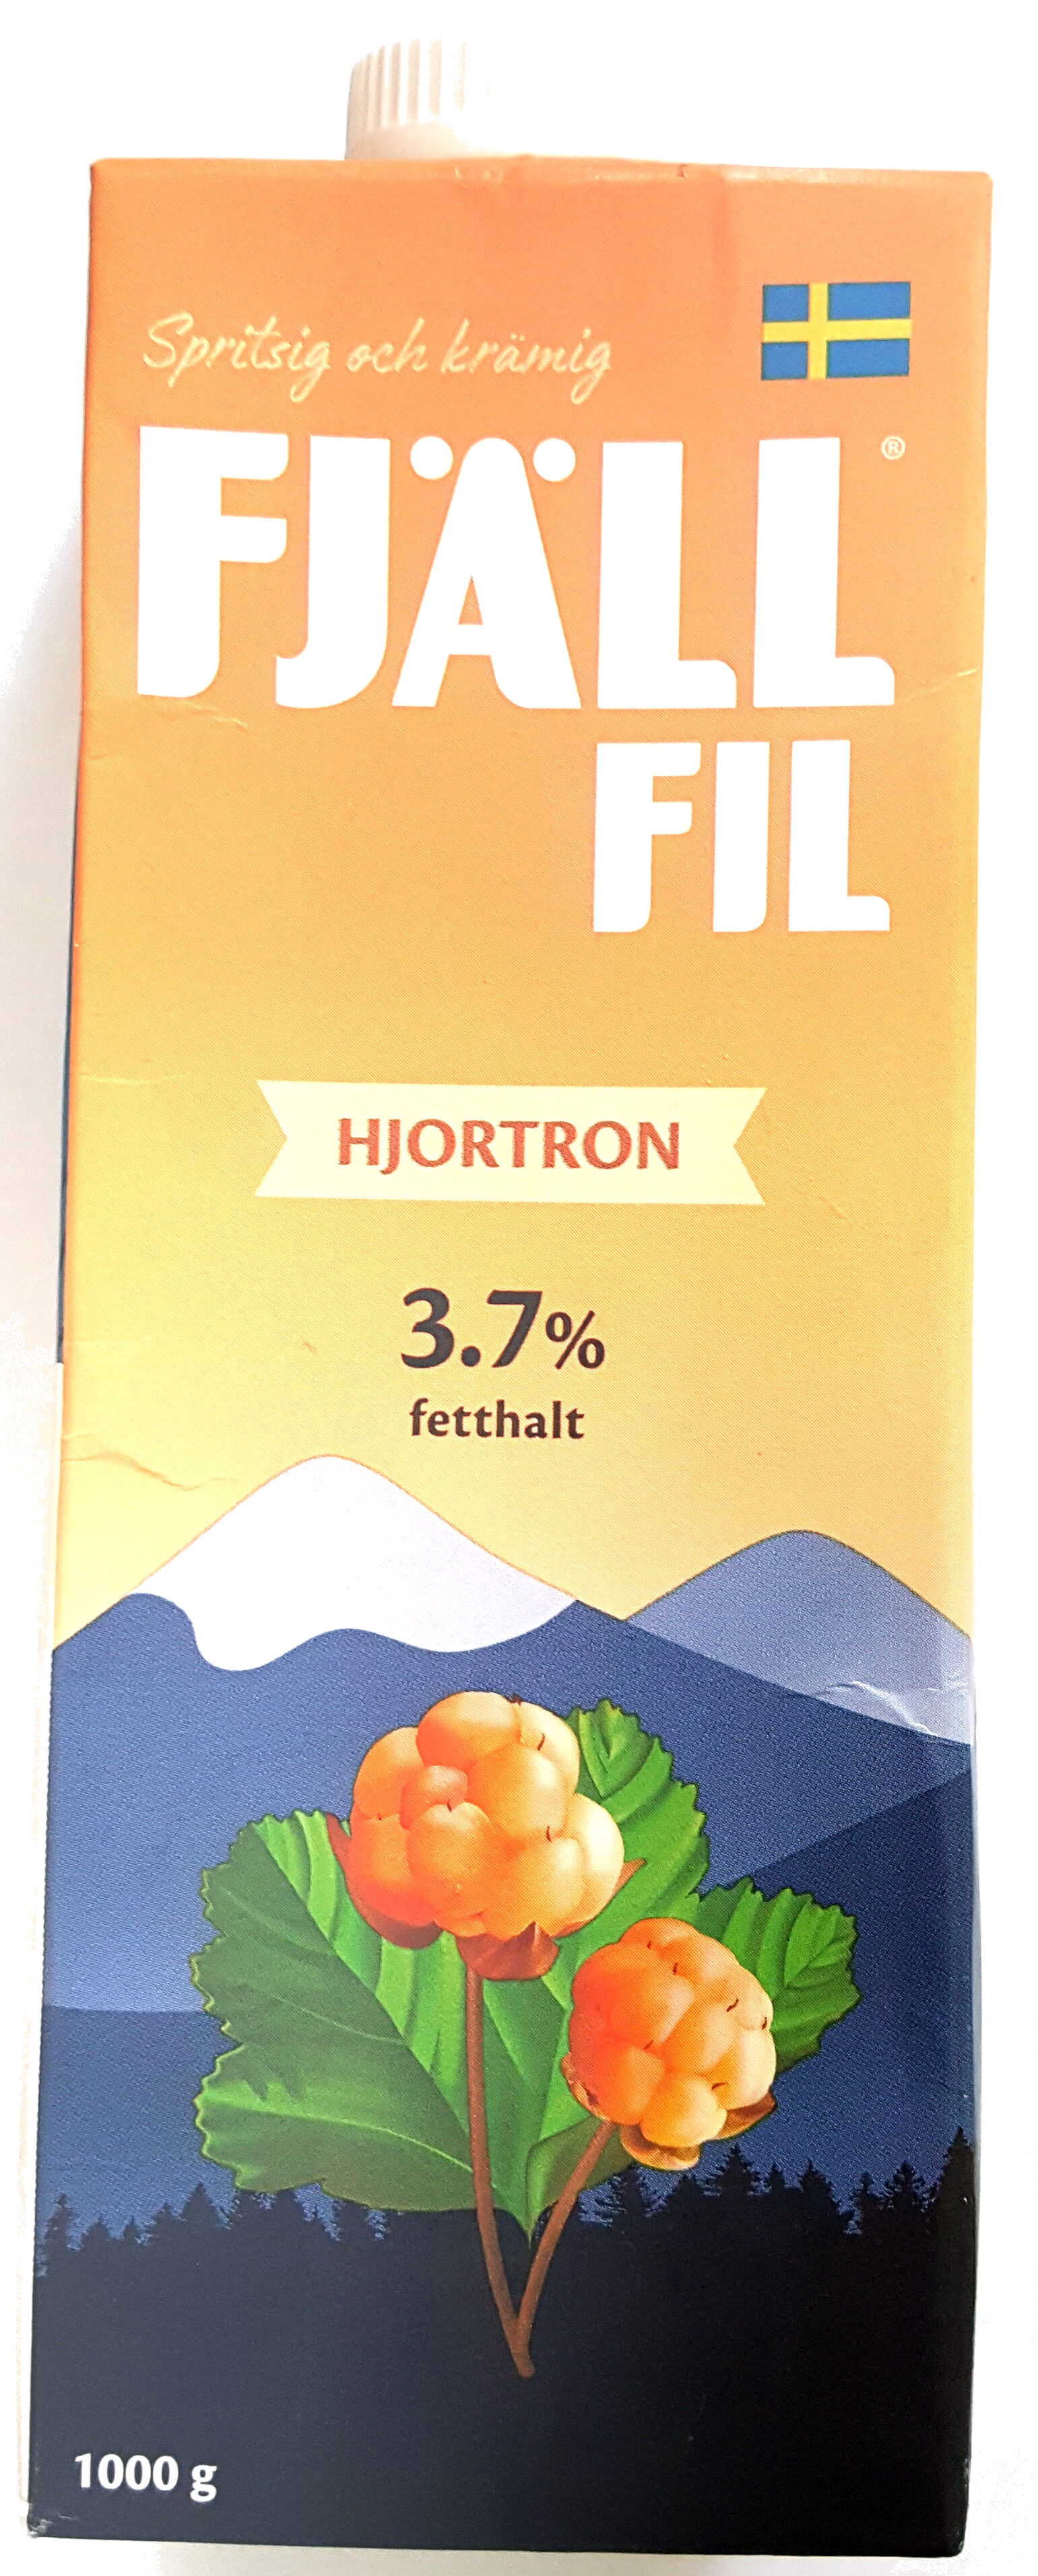 Fjällfil - Hjortron - Produkt - sv